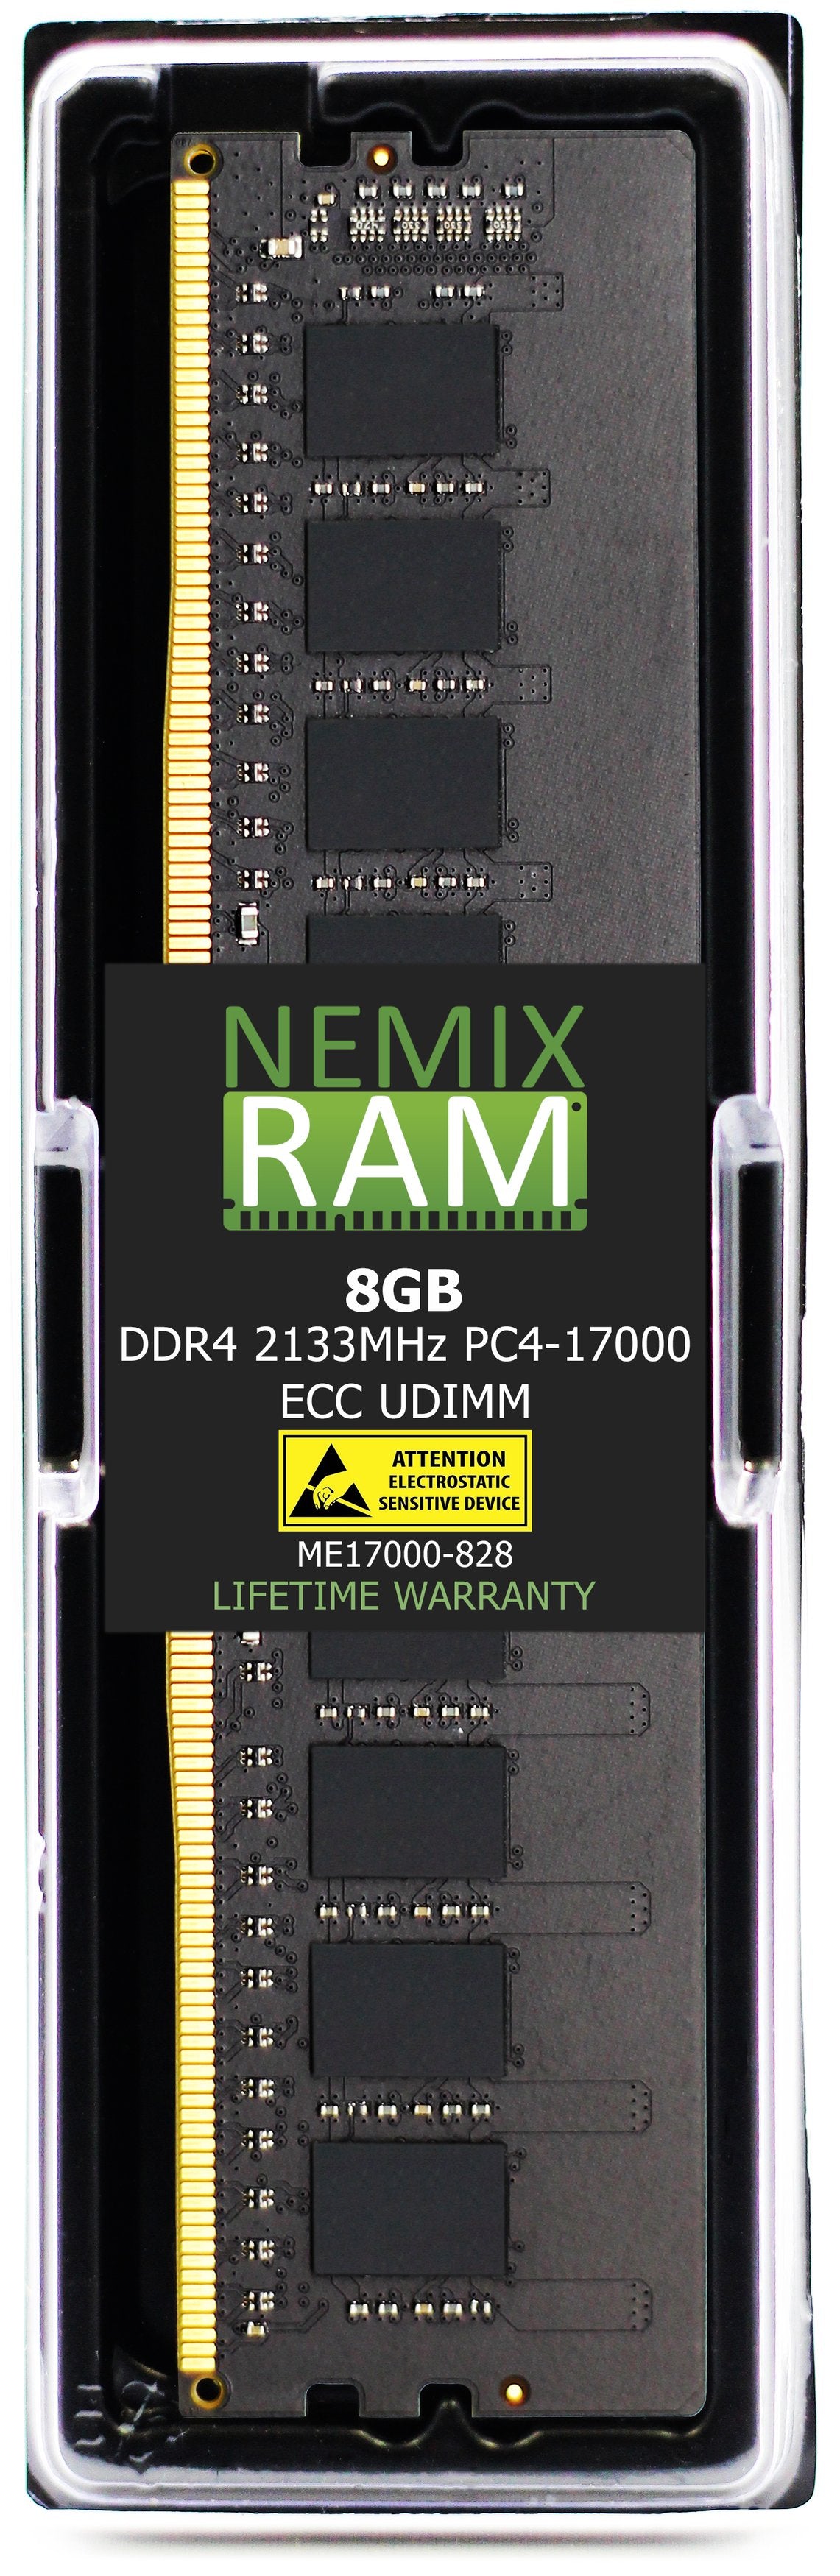 8GB DDR4 2133MHZ PC4-17000 ECC UDIMM Compatible with Supermicro MEM-DR480L-SL02-EU21